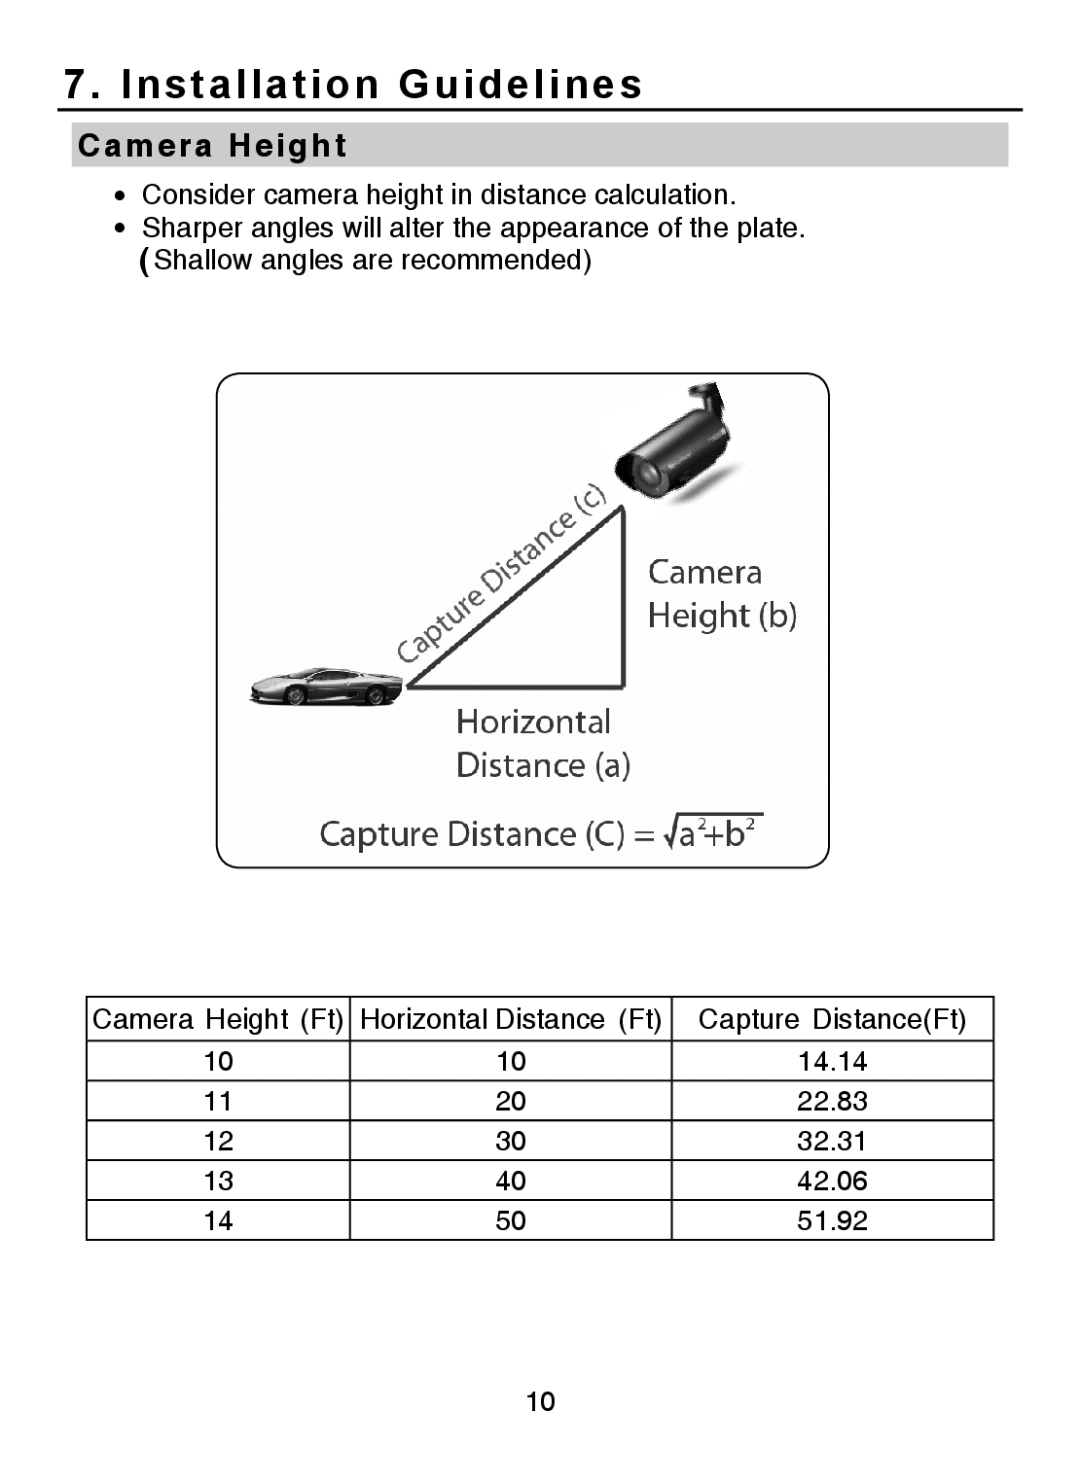 EverFocus EZ-PLATECAM2 operation manual Installation Guidelines, Camera Height 